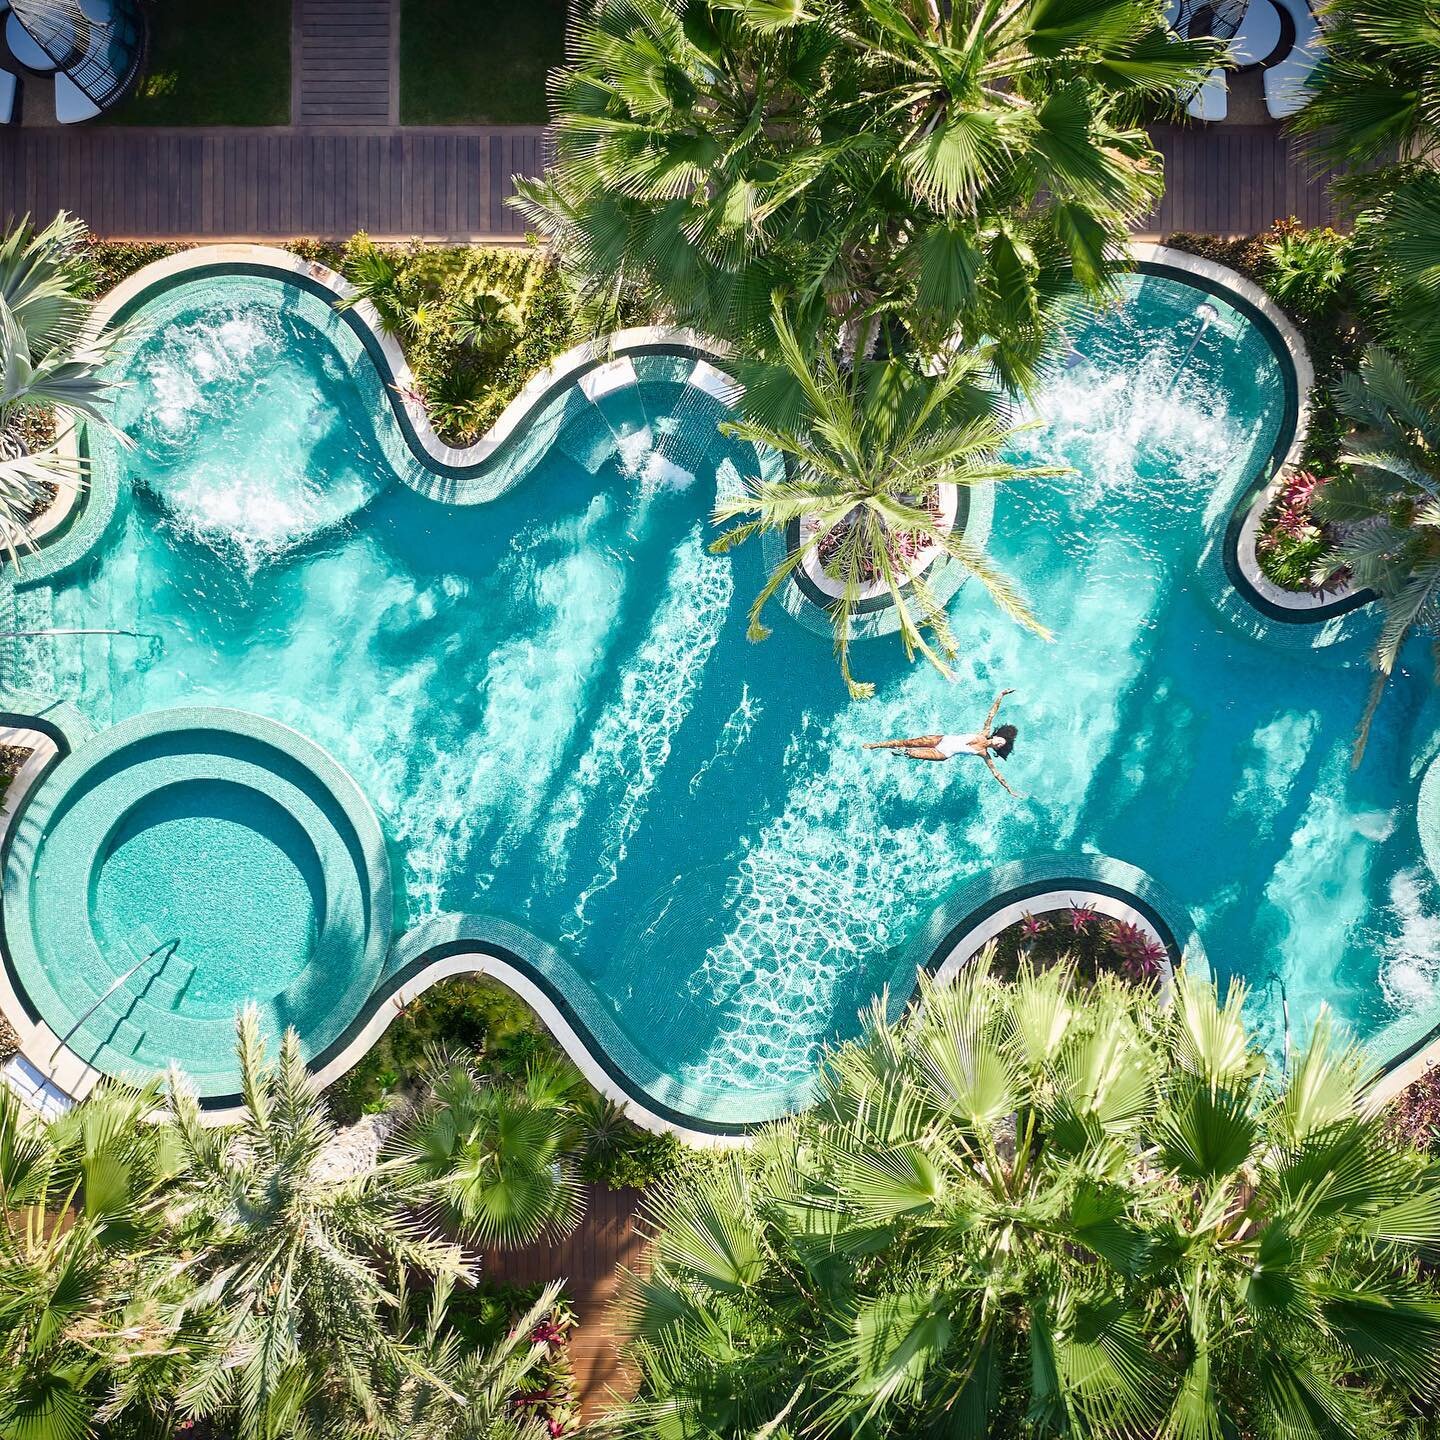 Relax at Alkemia SPA @zadunreserve @ritzcarltonreserve #EdgardoContrerasPhotography 
.
.
.
.
.
.
#hotelphotography #hotelphotographer #luxuryhotel #luxuryresort #zadun #reserve #loscabos #spa #model #pool #aerialphotography #dronephotography #greener